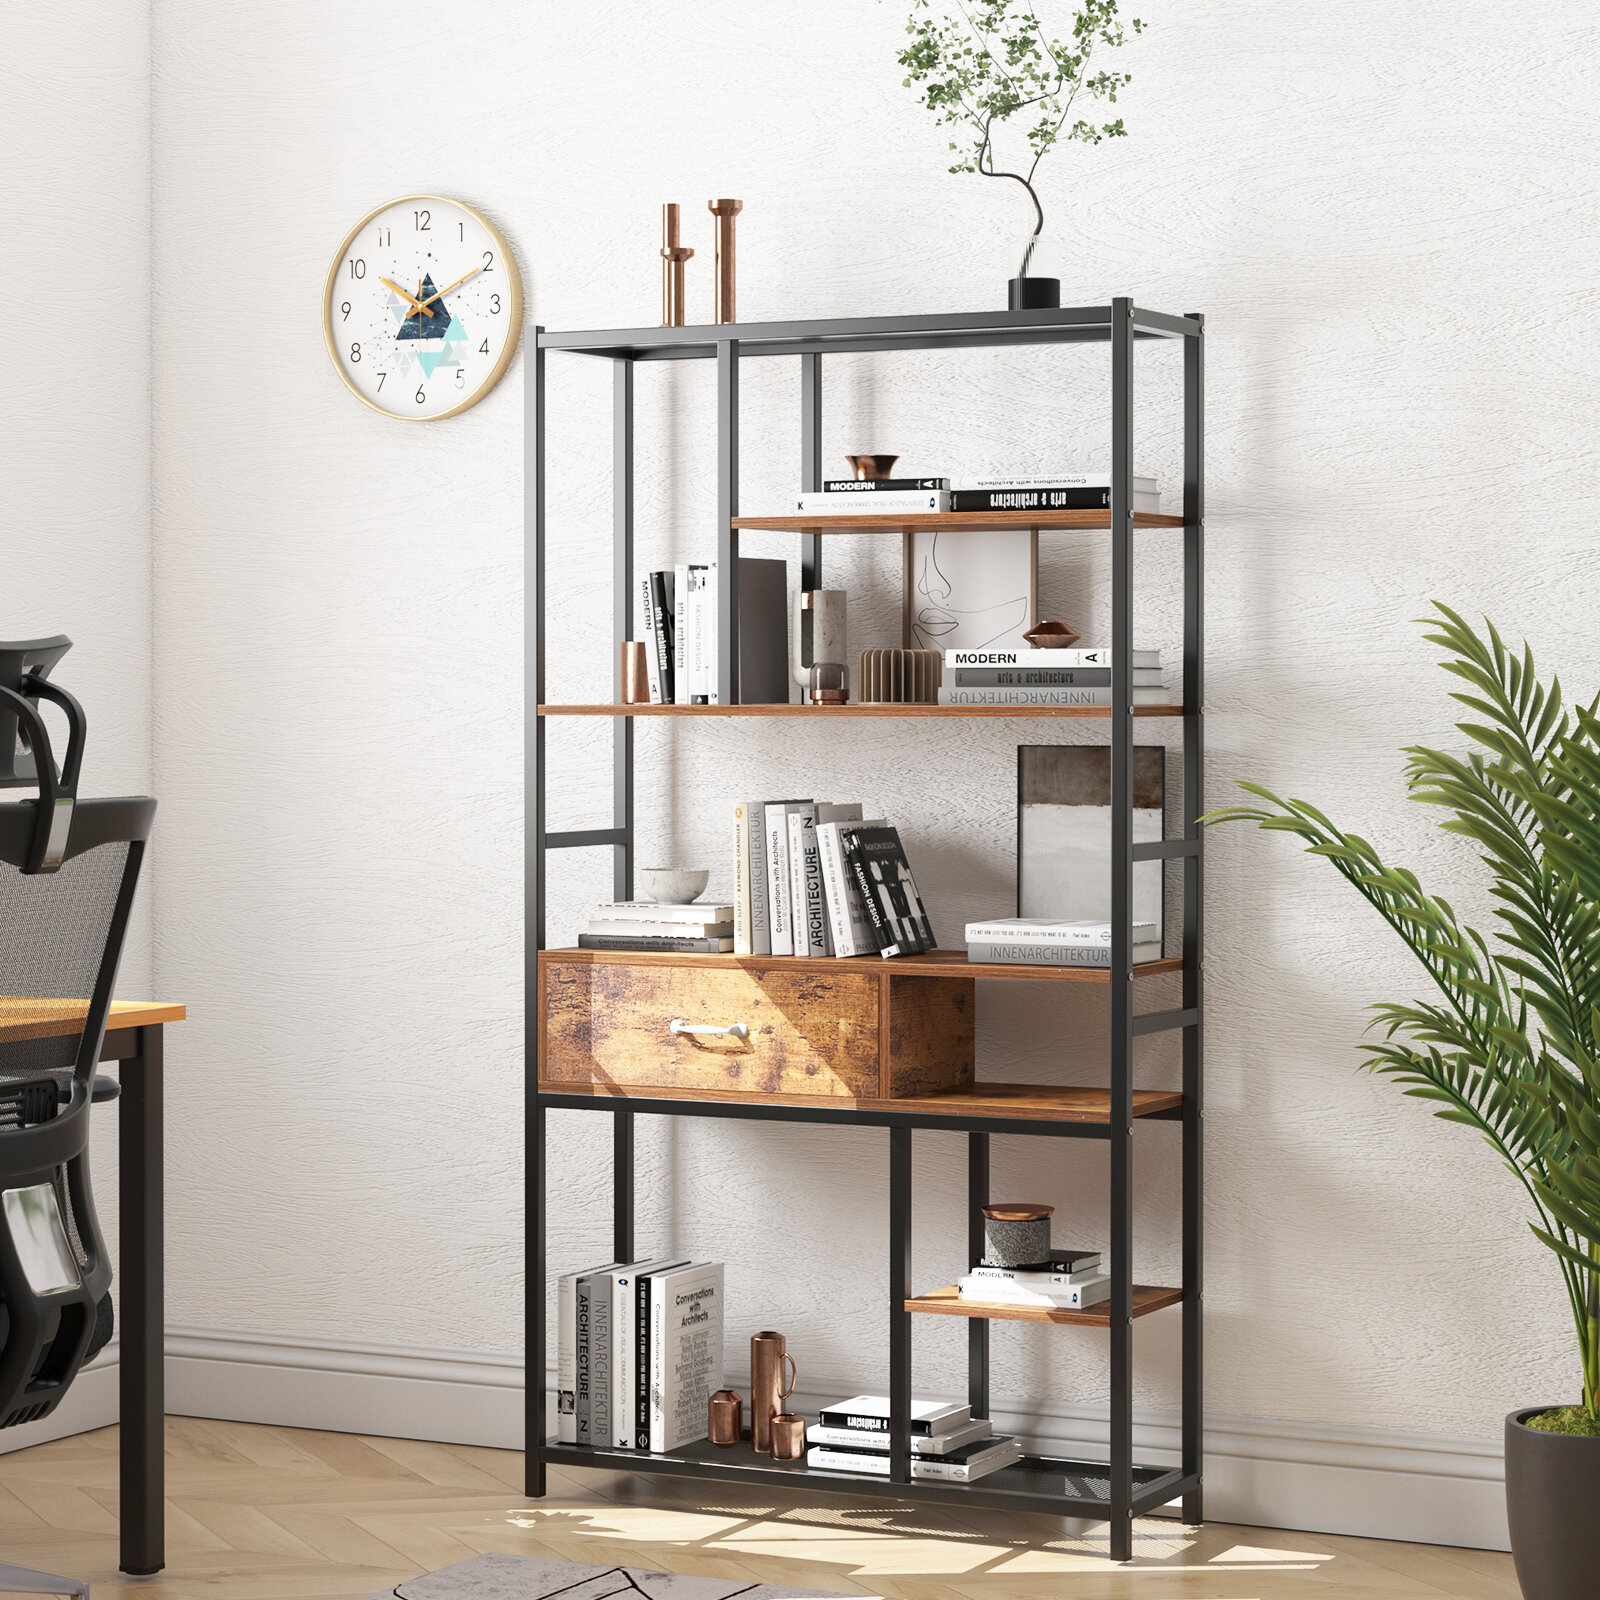 OTK Bookshelf,4 Tier Industrial Book Shelf,Metal Bookcase,Modern Book Shelves for Bedroom,Living Room and Home Office,4-Shelf,Black